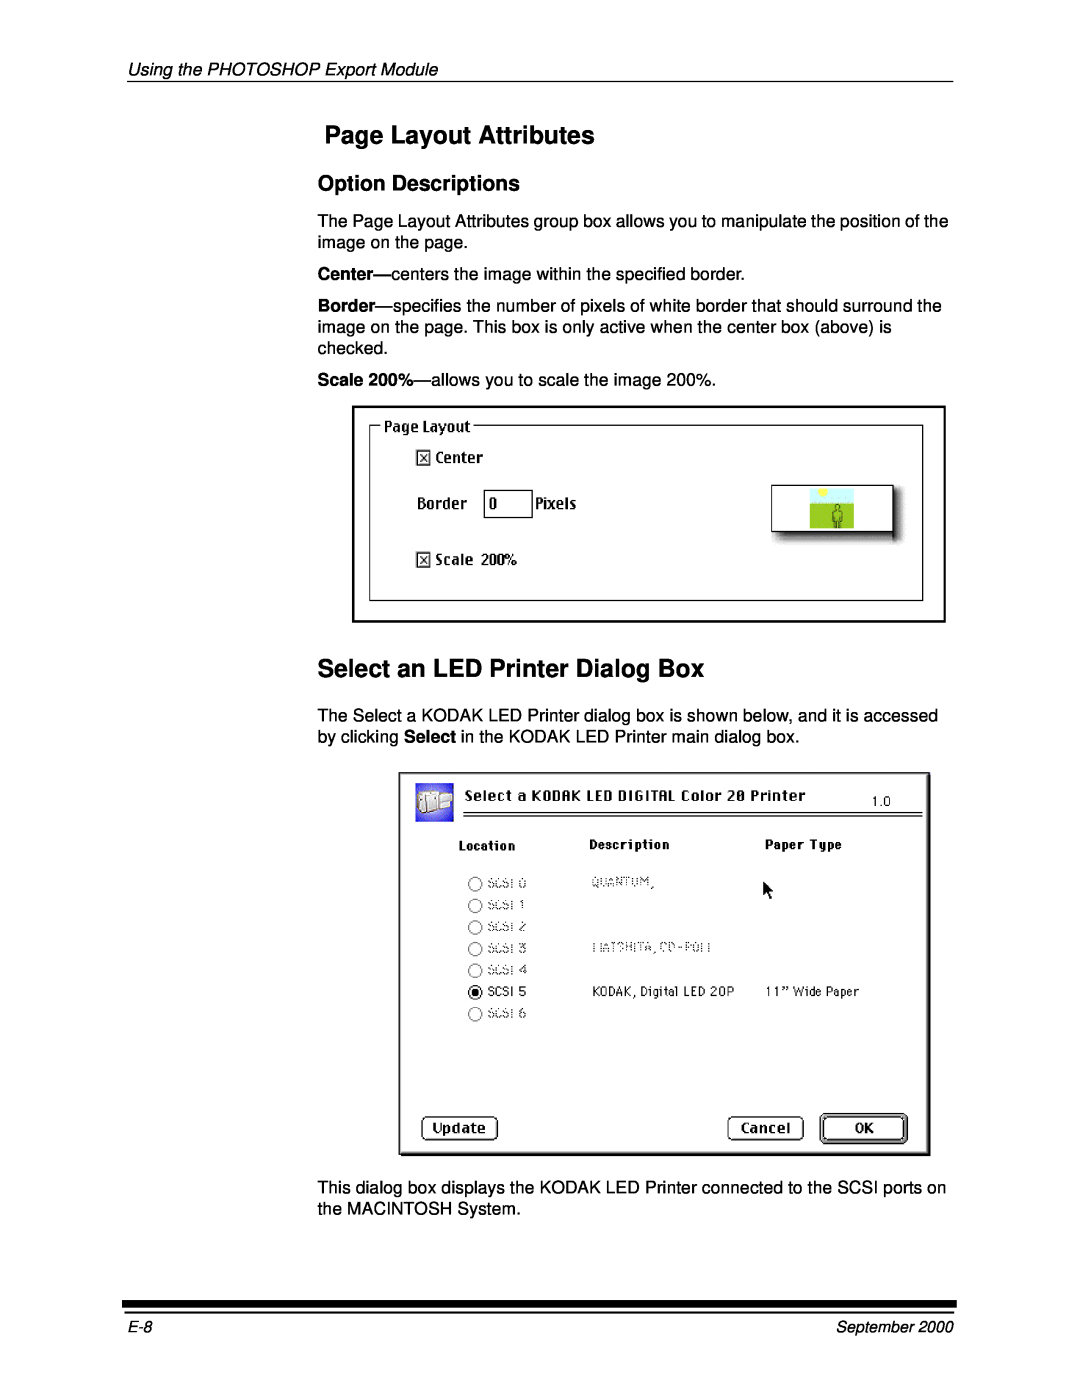 Kodak 20P Page Layout Attributes, Select an LED Printer Dialog Box, Option Descriptions, Using the PHOTOSHOP Export Module 